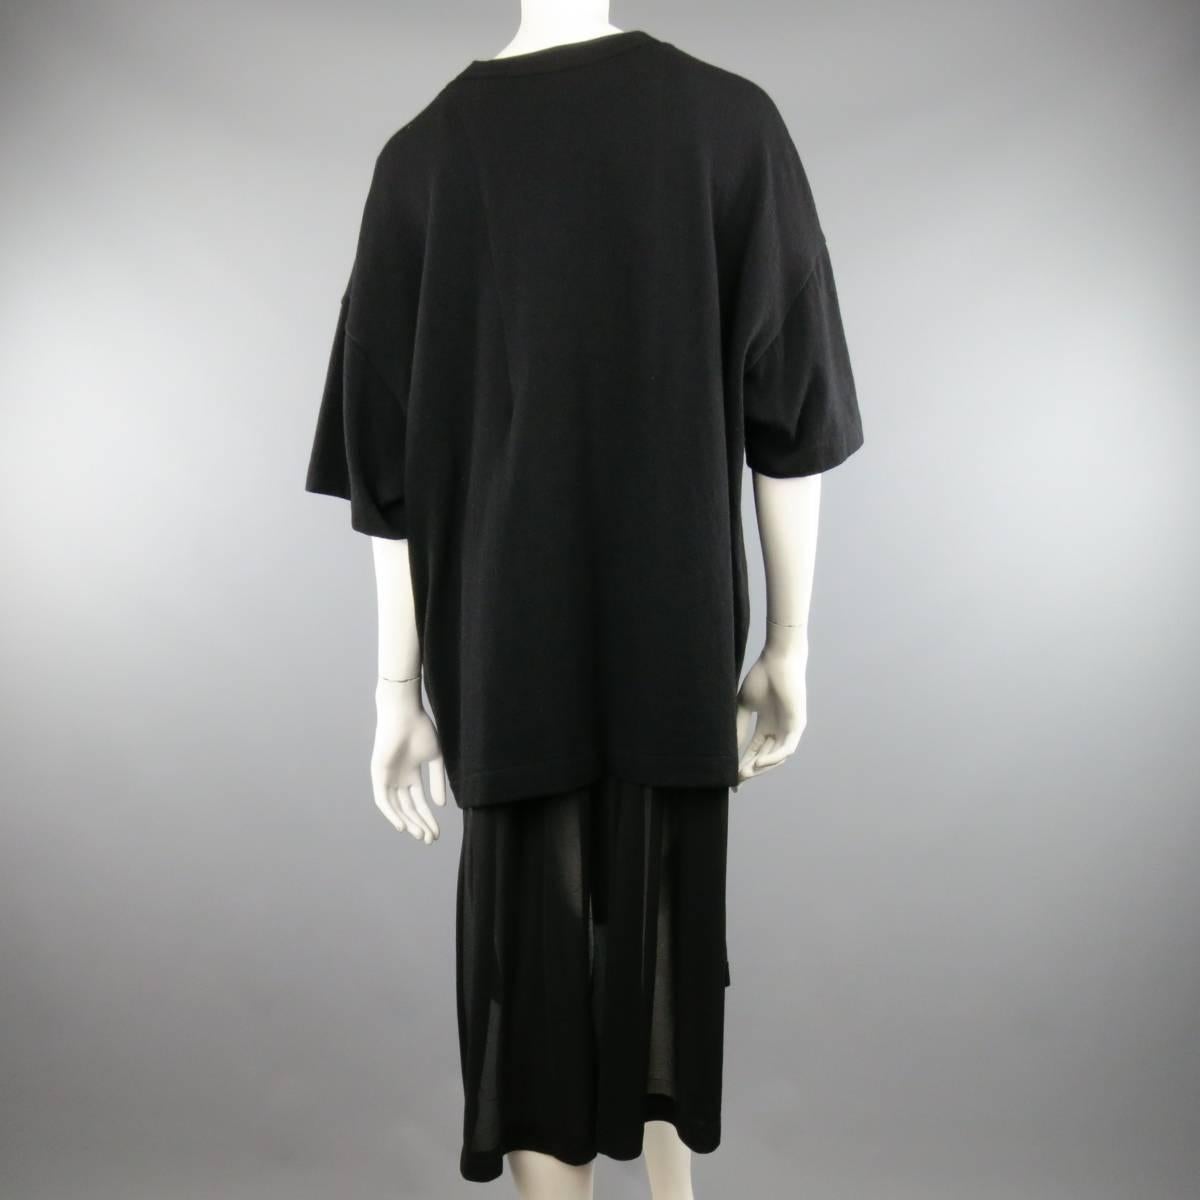 COMME des GARCONS Spring 2015 XS Black Mixed Fabrics Wool / Nylon T-shirt Dress 2